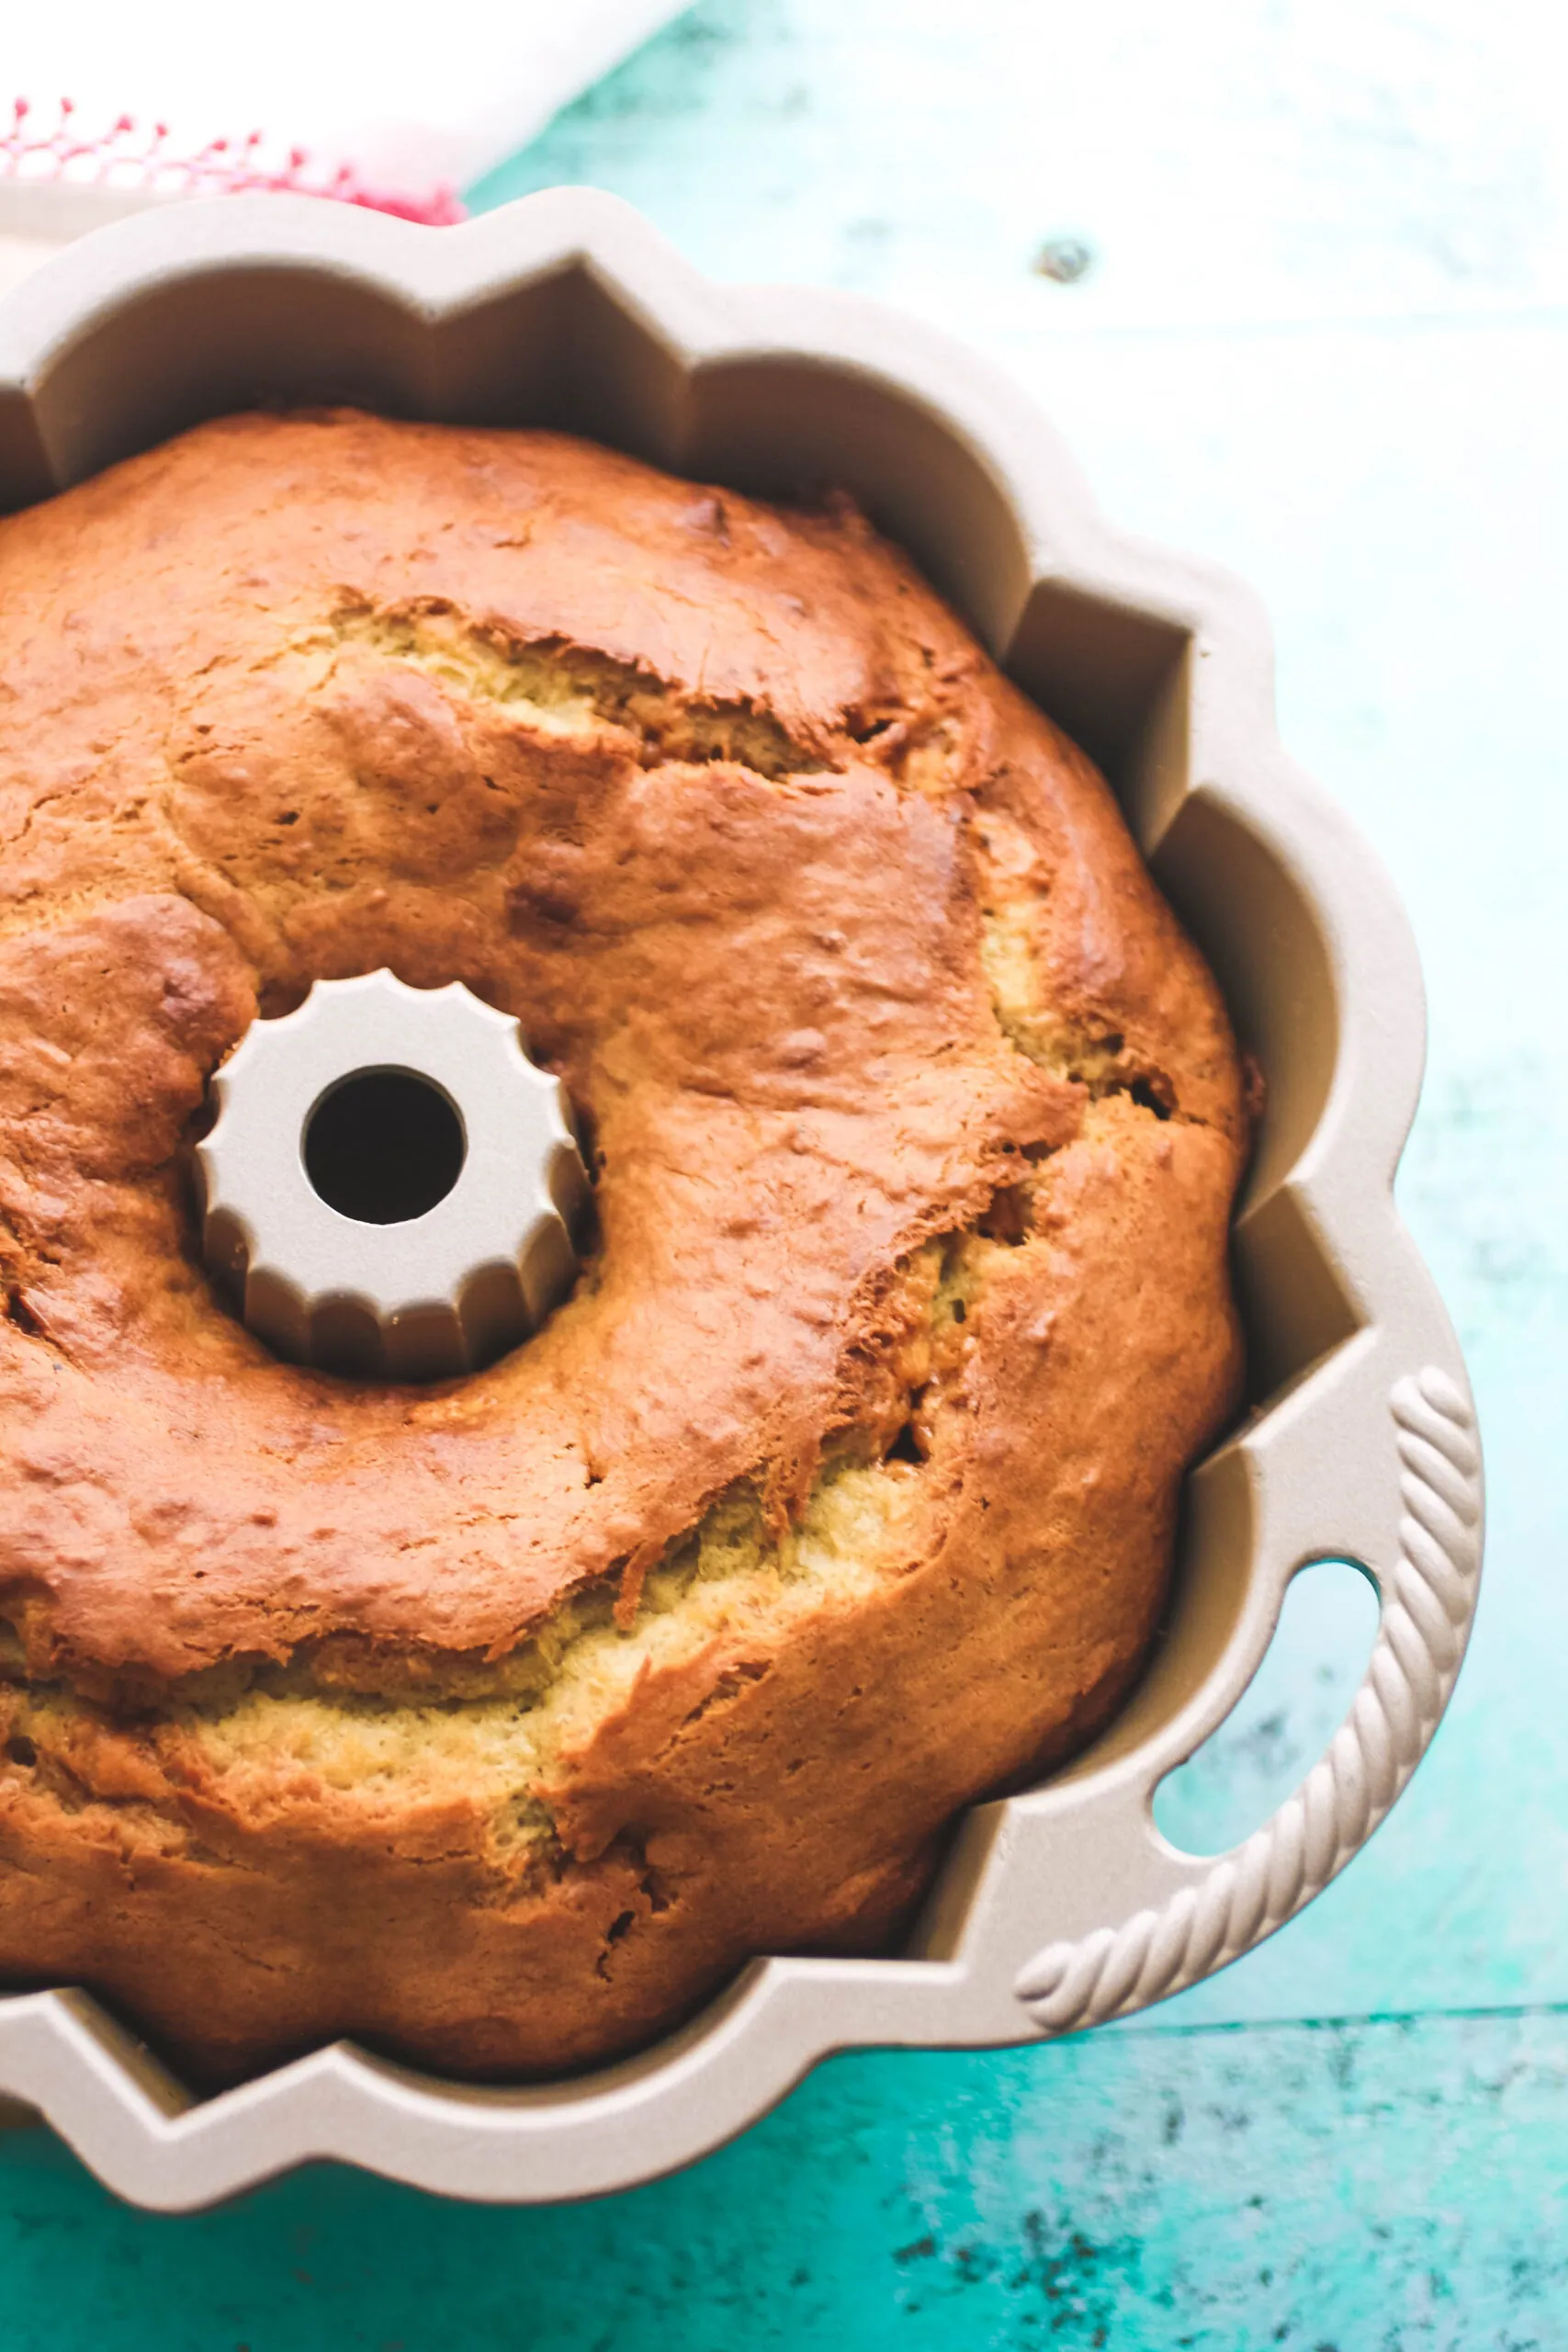 A Banana-Butterscotch Bundt Cake in the pan, ready to flip to serve up a delightful dessert!